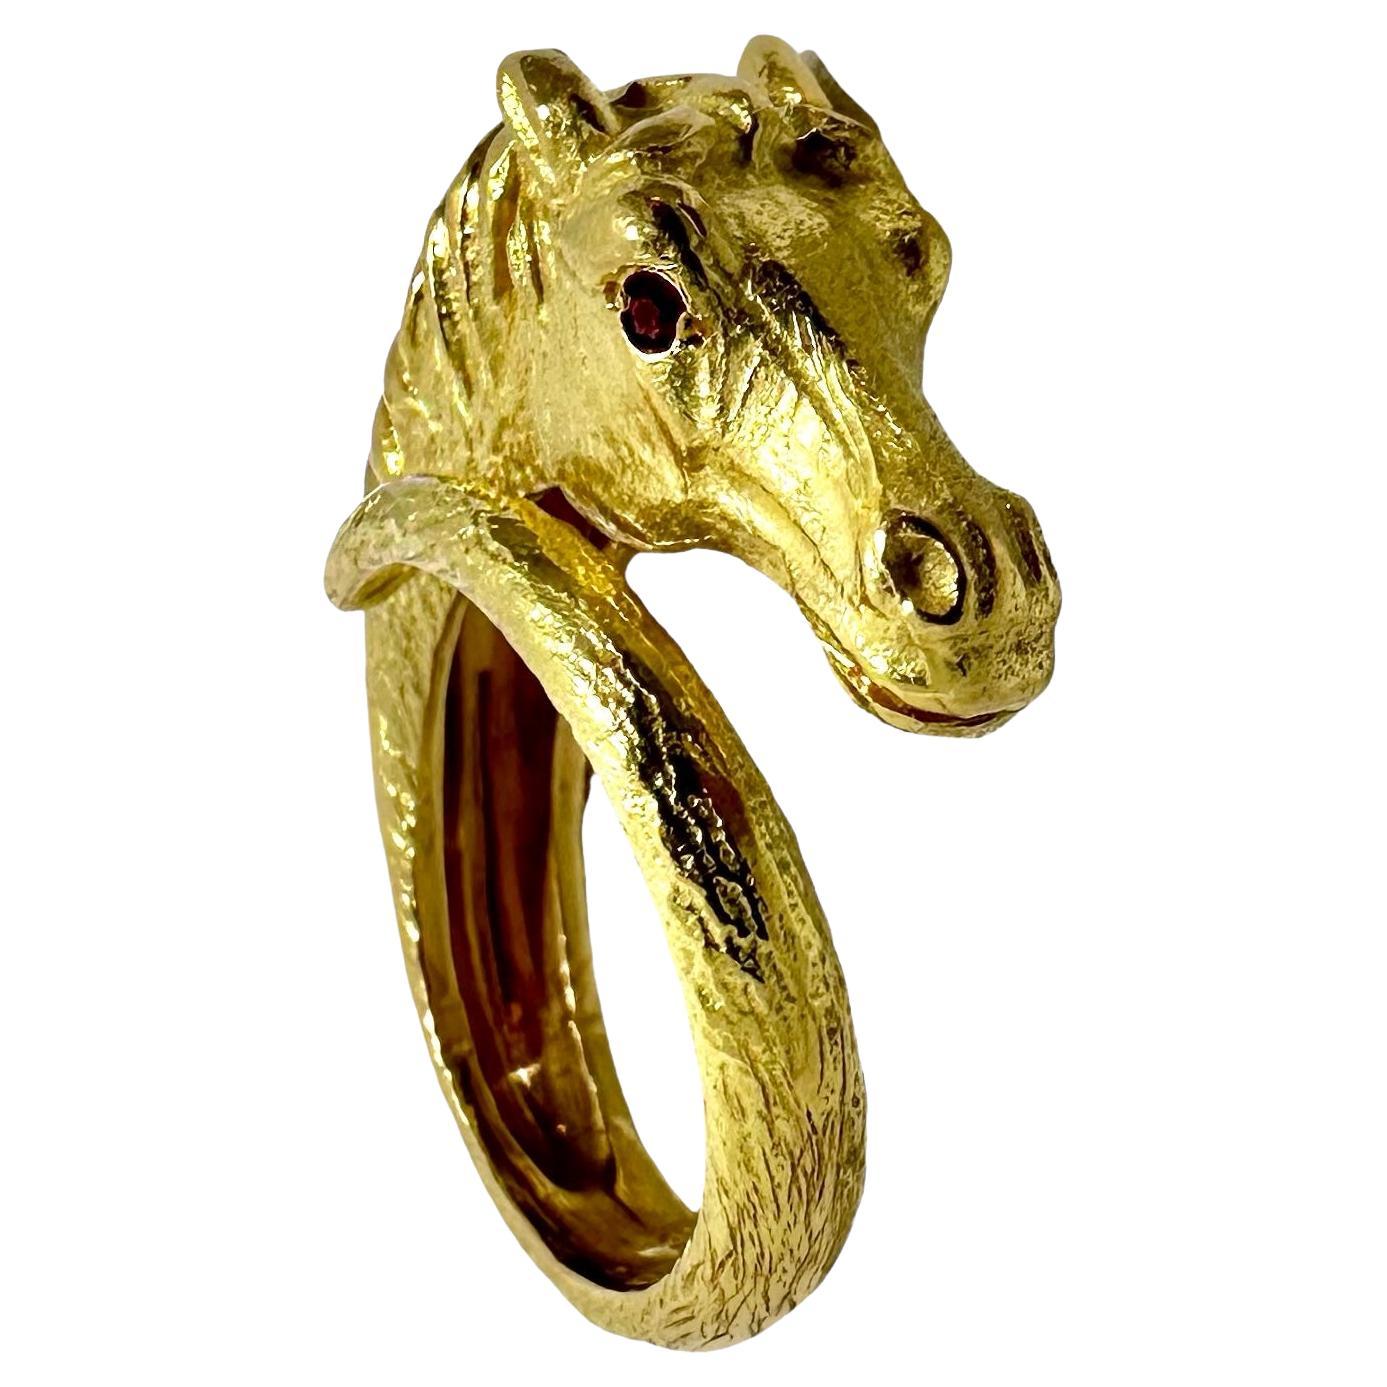  Lifelike Vintage George Lederman 18k Gold Equestrian Ring with Ruby Eyes For Sale